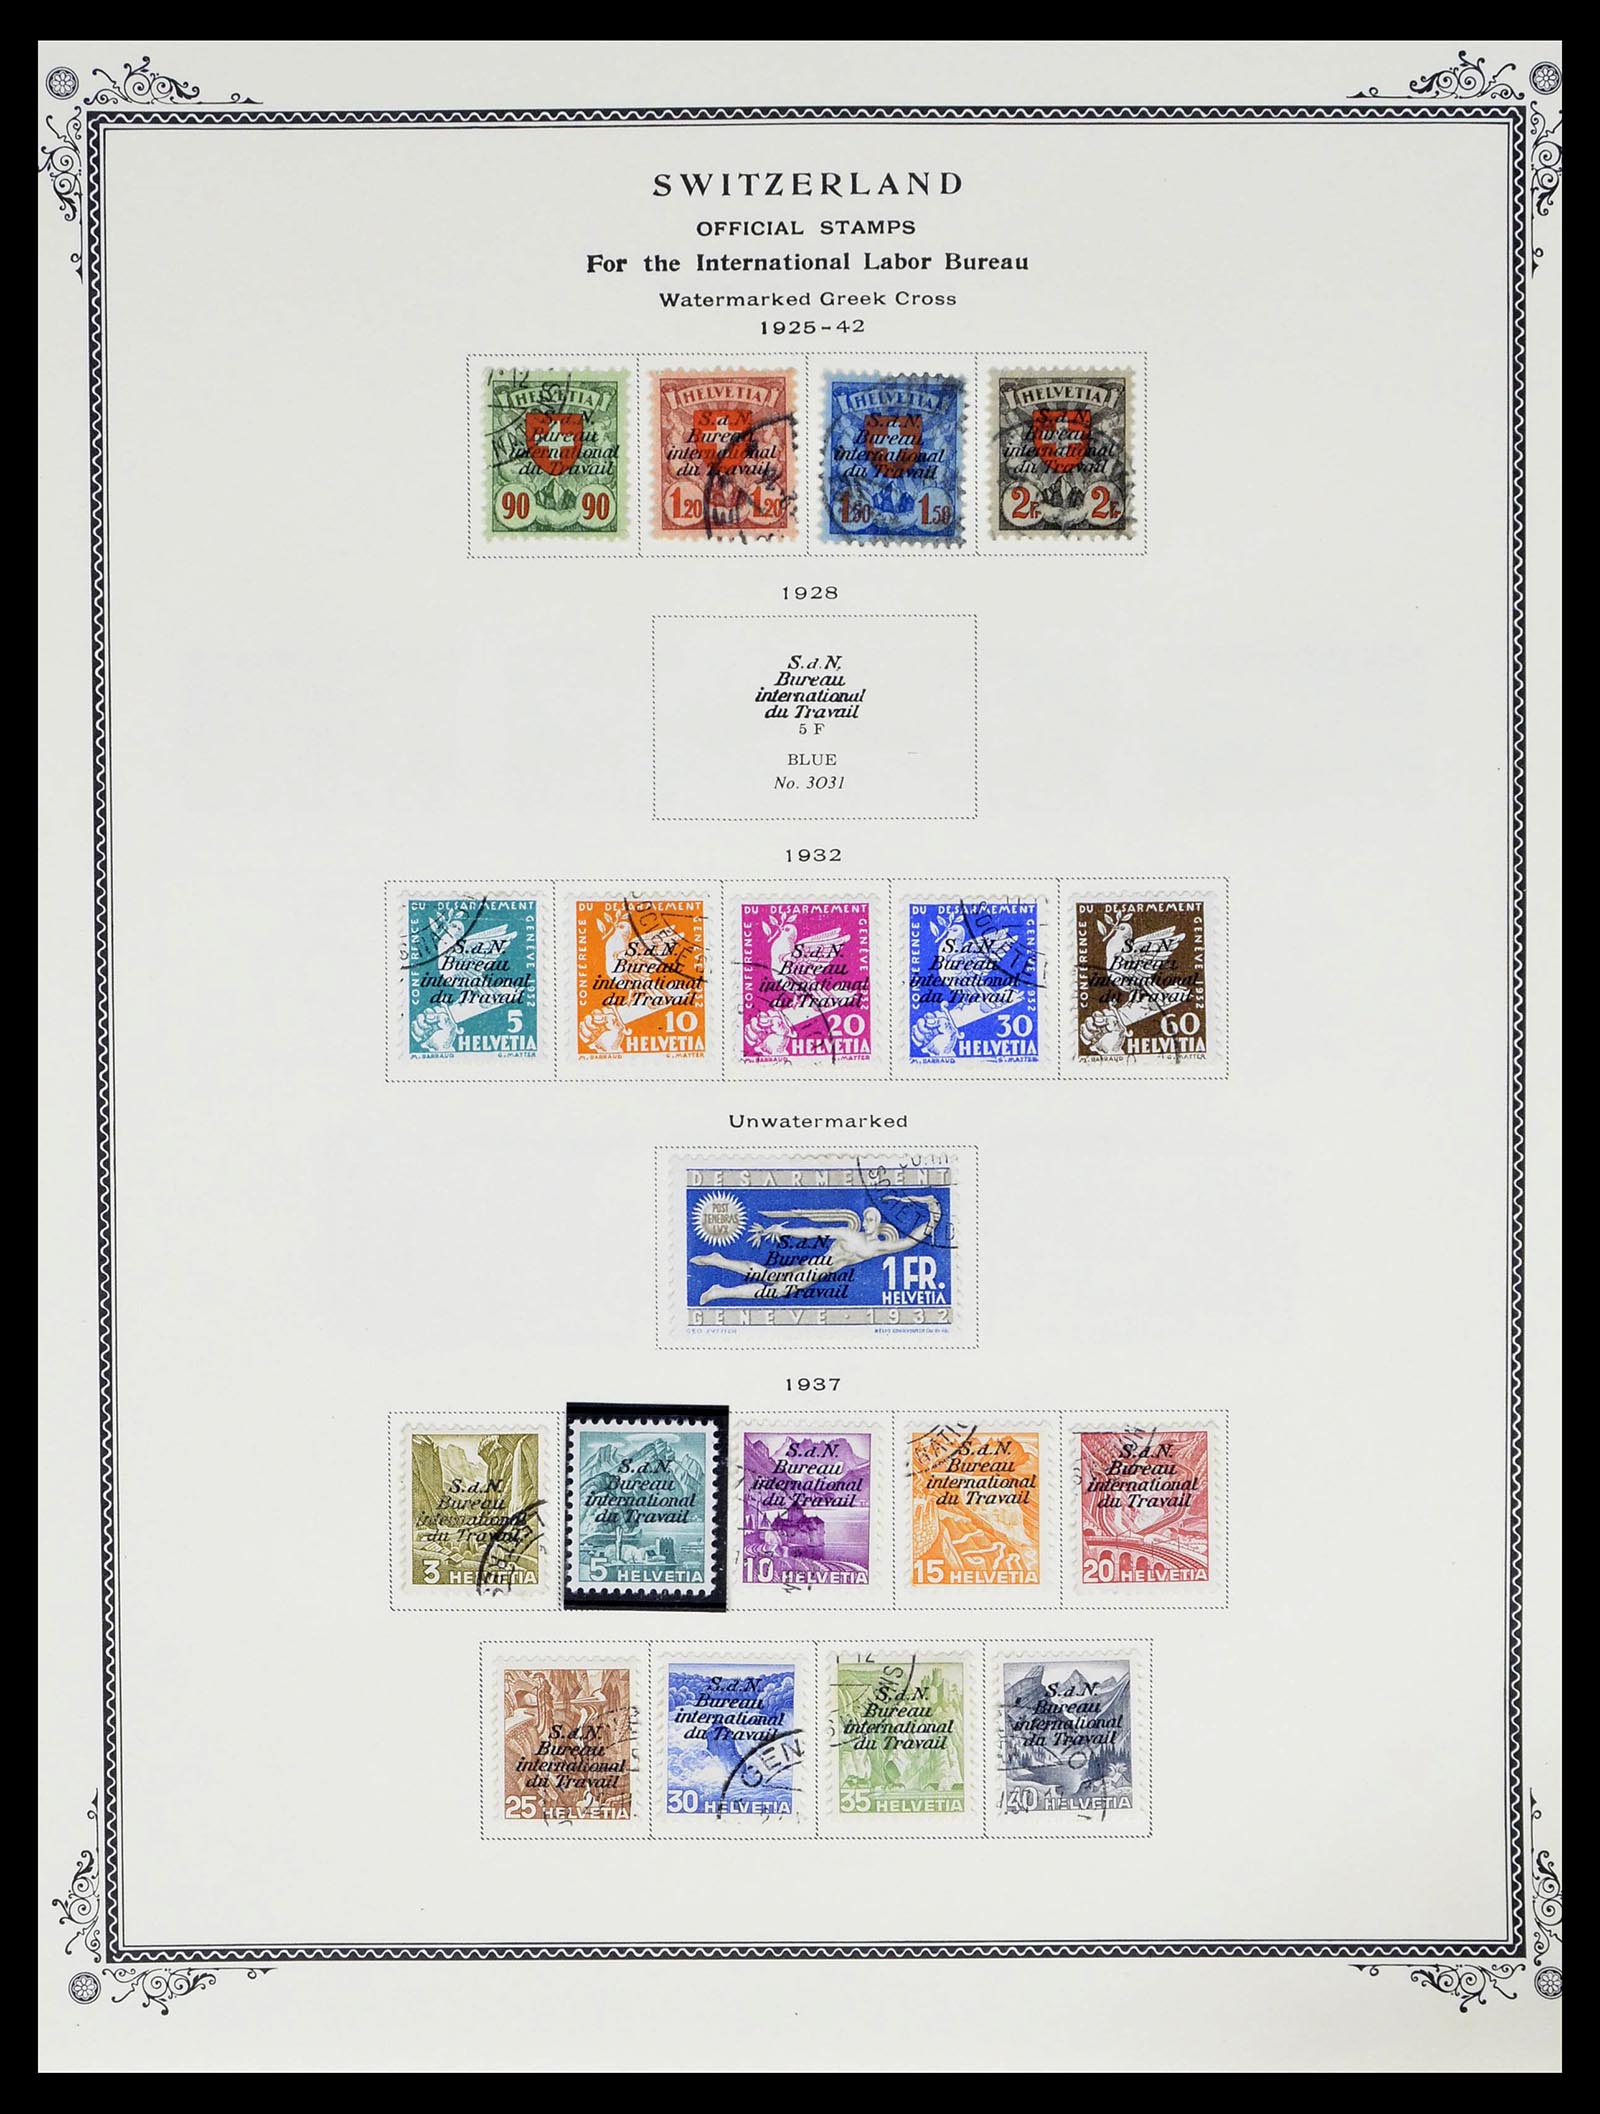 39178 0244 - Stamp collection 39178 Switzerland 1850-1989.